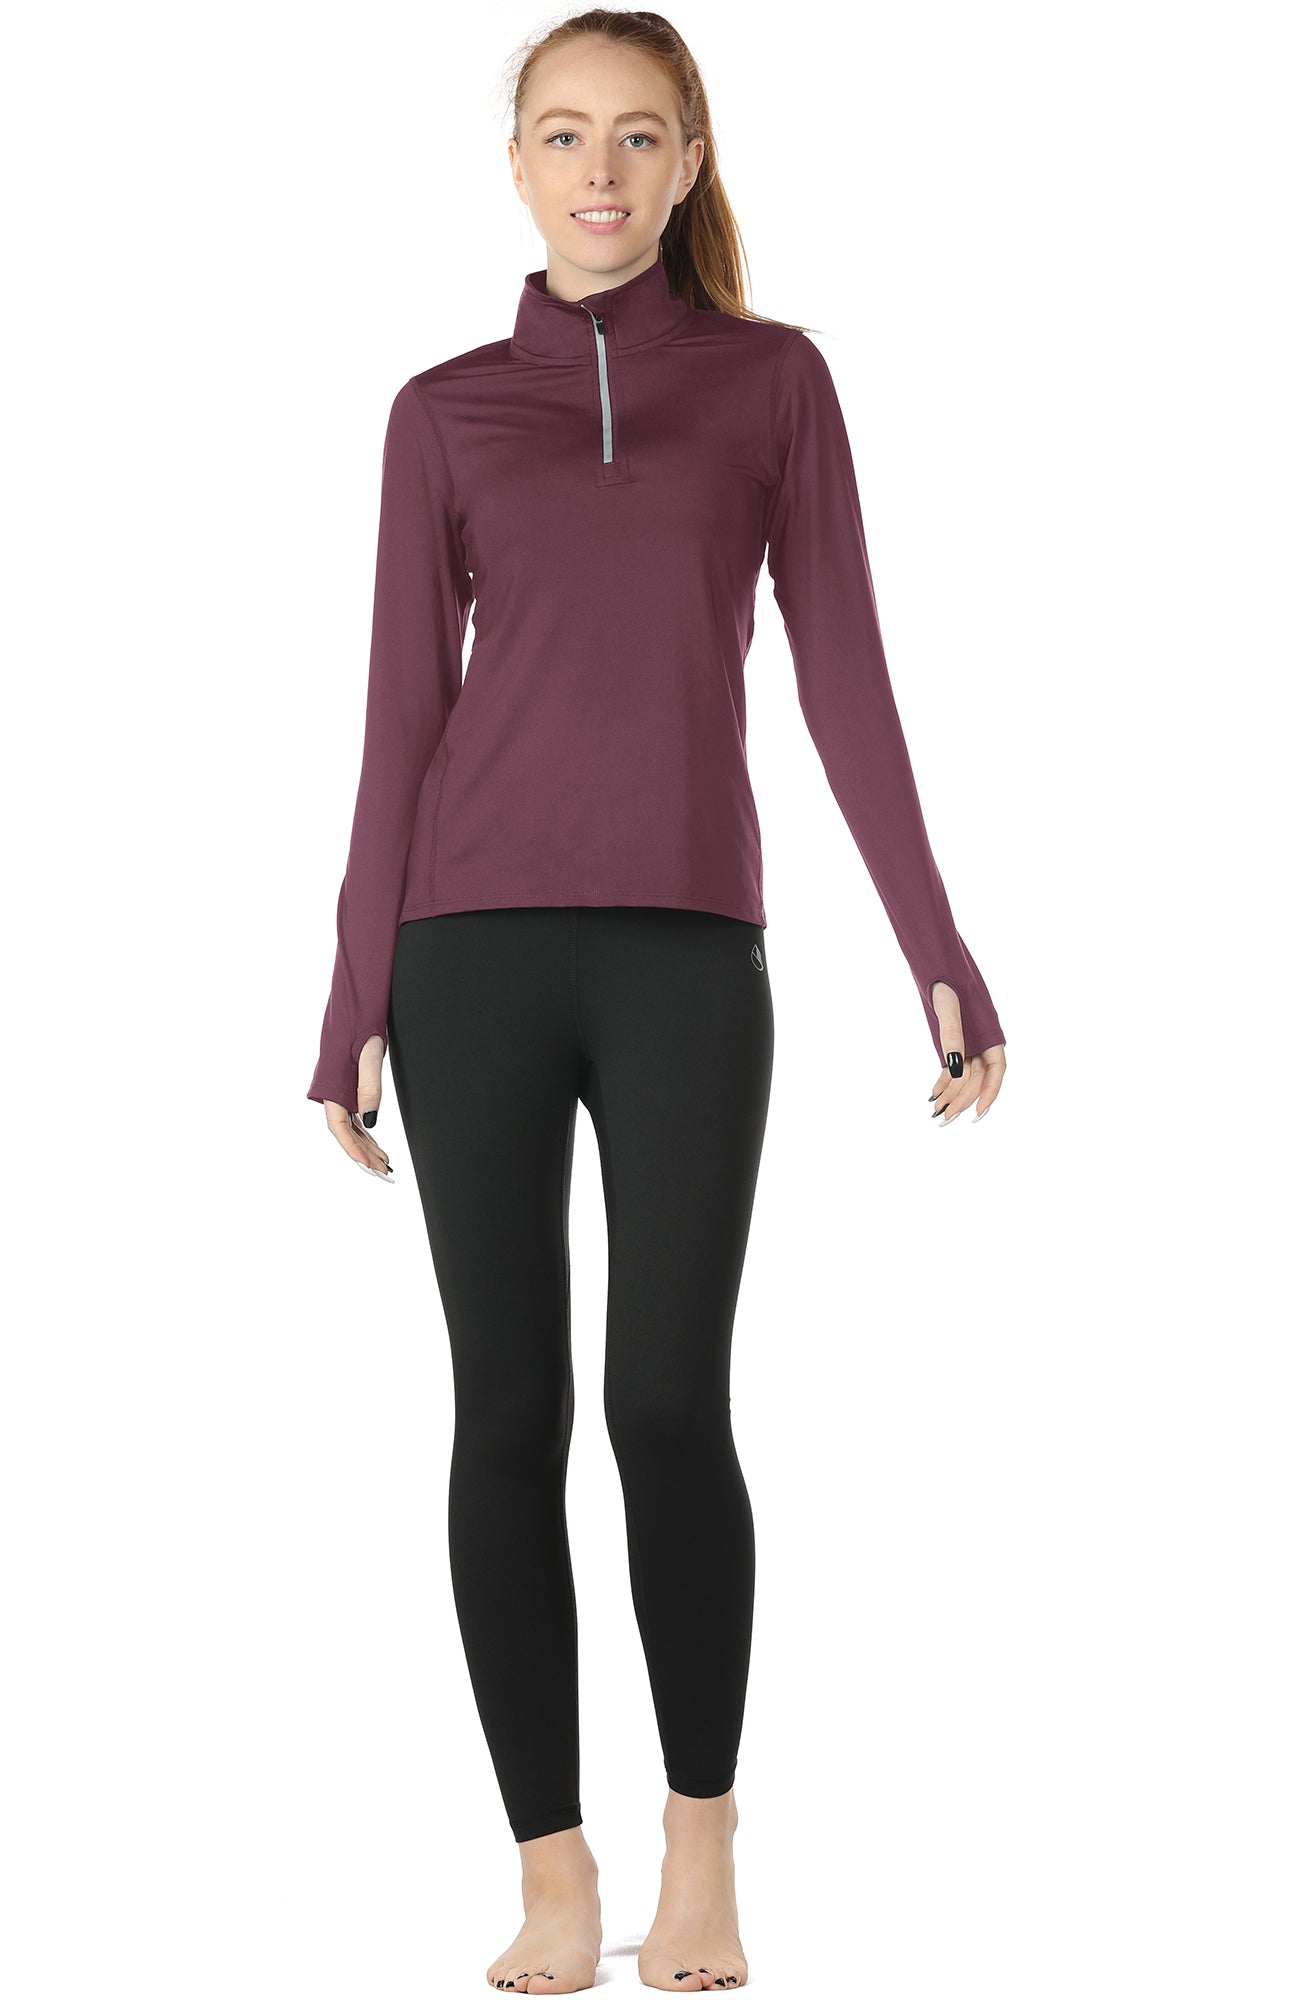 Xianreng Women's Long Sleeve Top Sweatshirt Yoga Half Zip Slim Fit Stand  Collar Pullover Running Tops Athletic Activewear Sports Gym Fitness Shirts  Ti